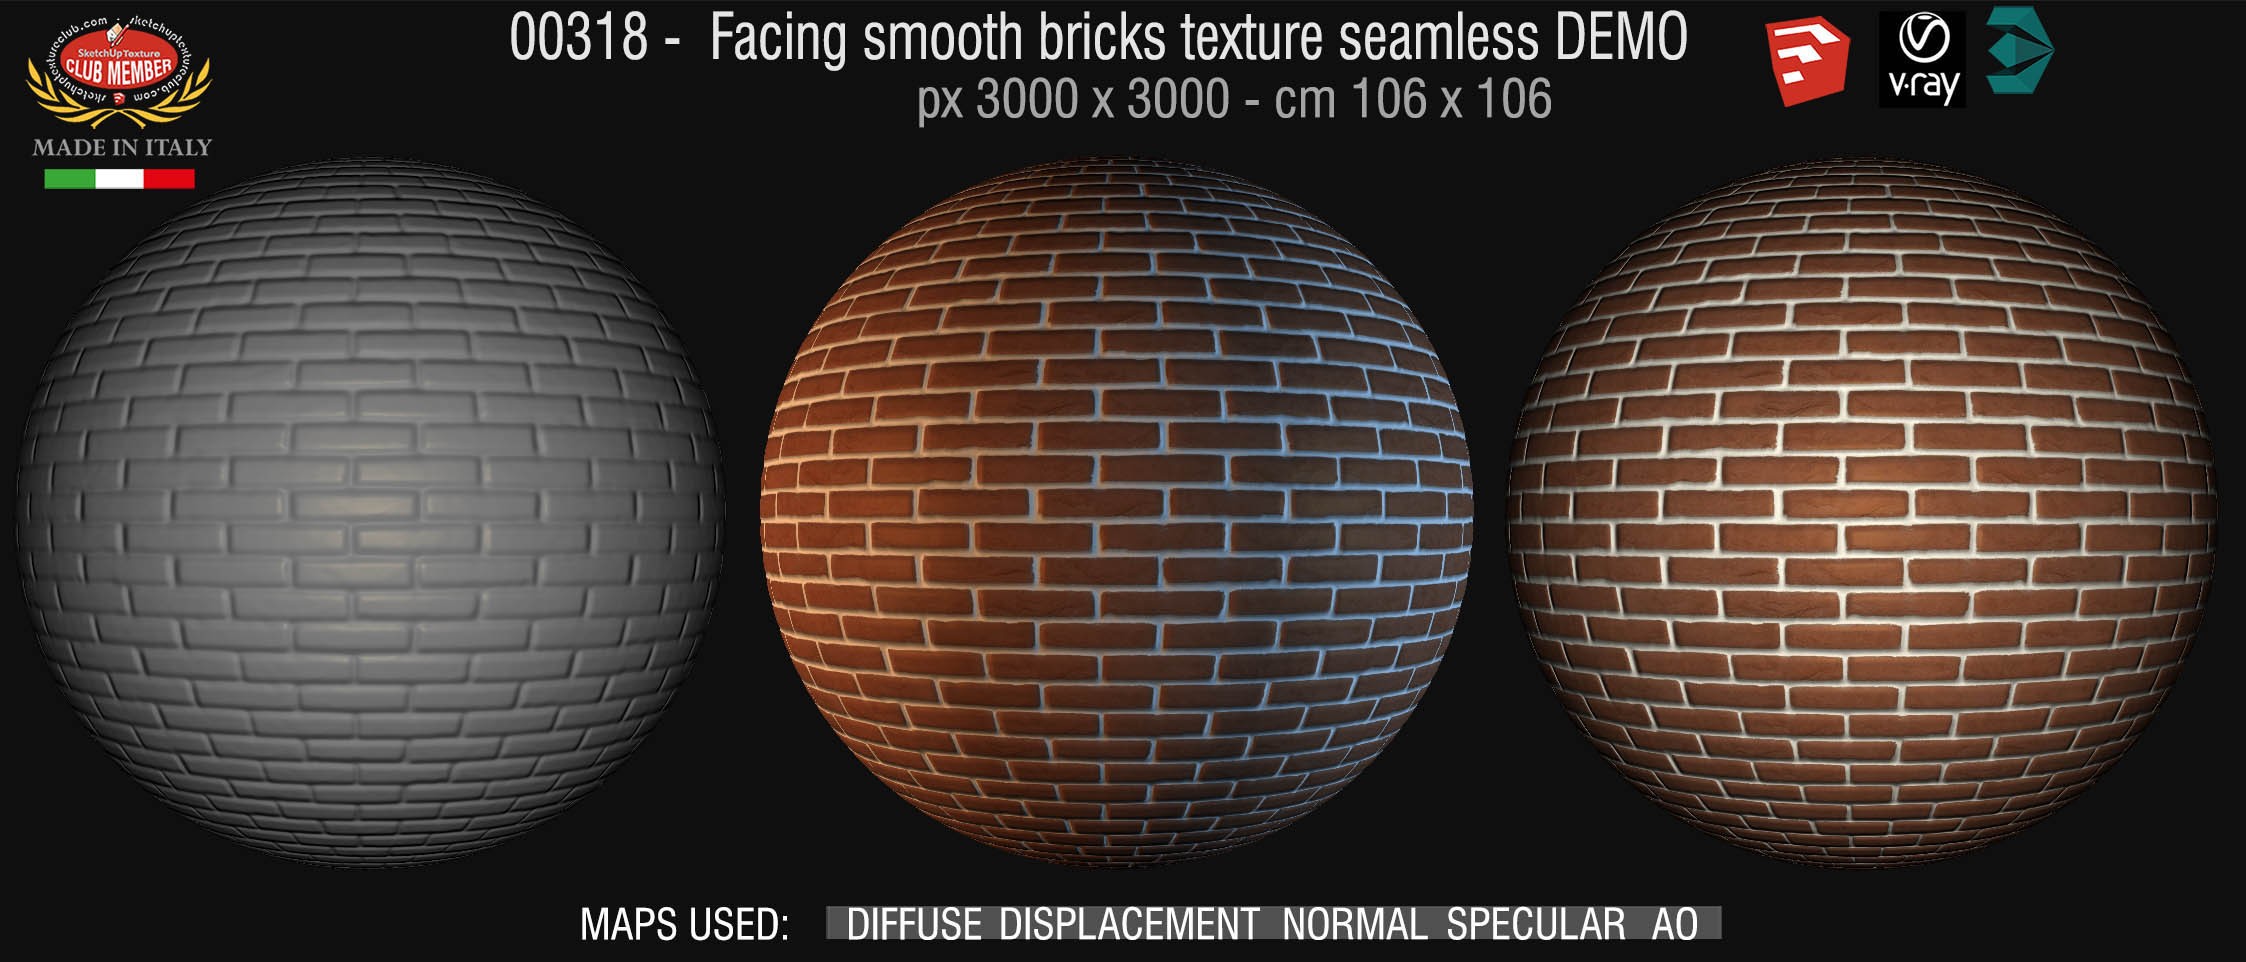 00318 Facing smooth bricks texture seamless + maps DEMO